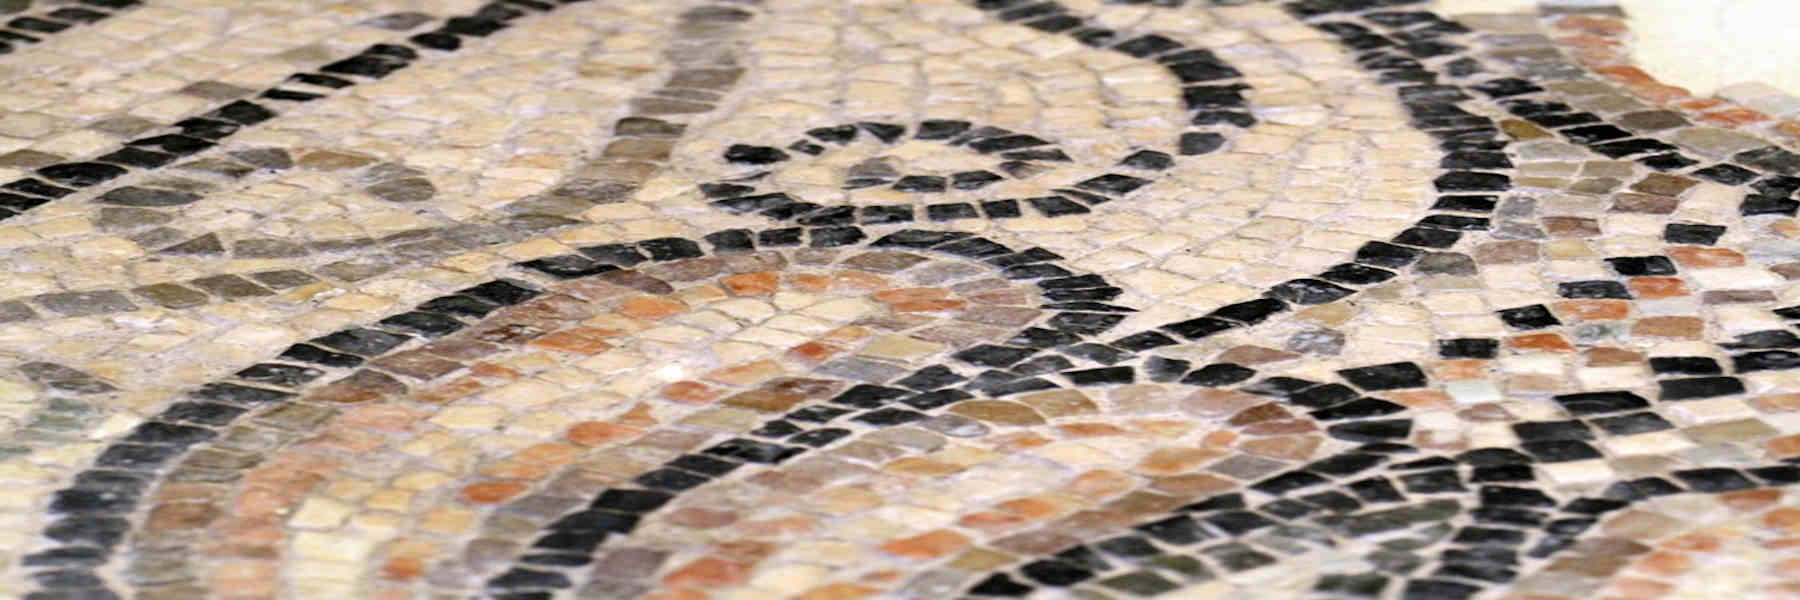 Archaeology in Musa: the mosaics of San Martino prope litus maris